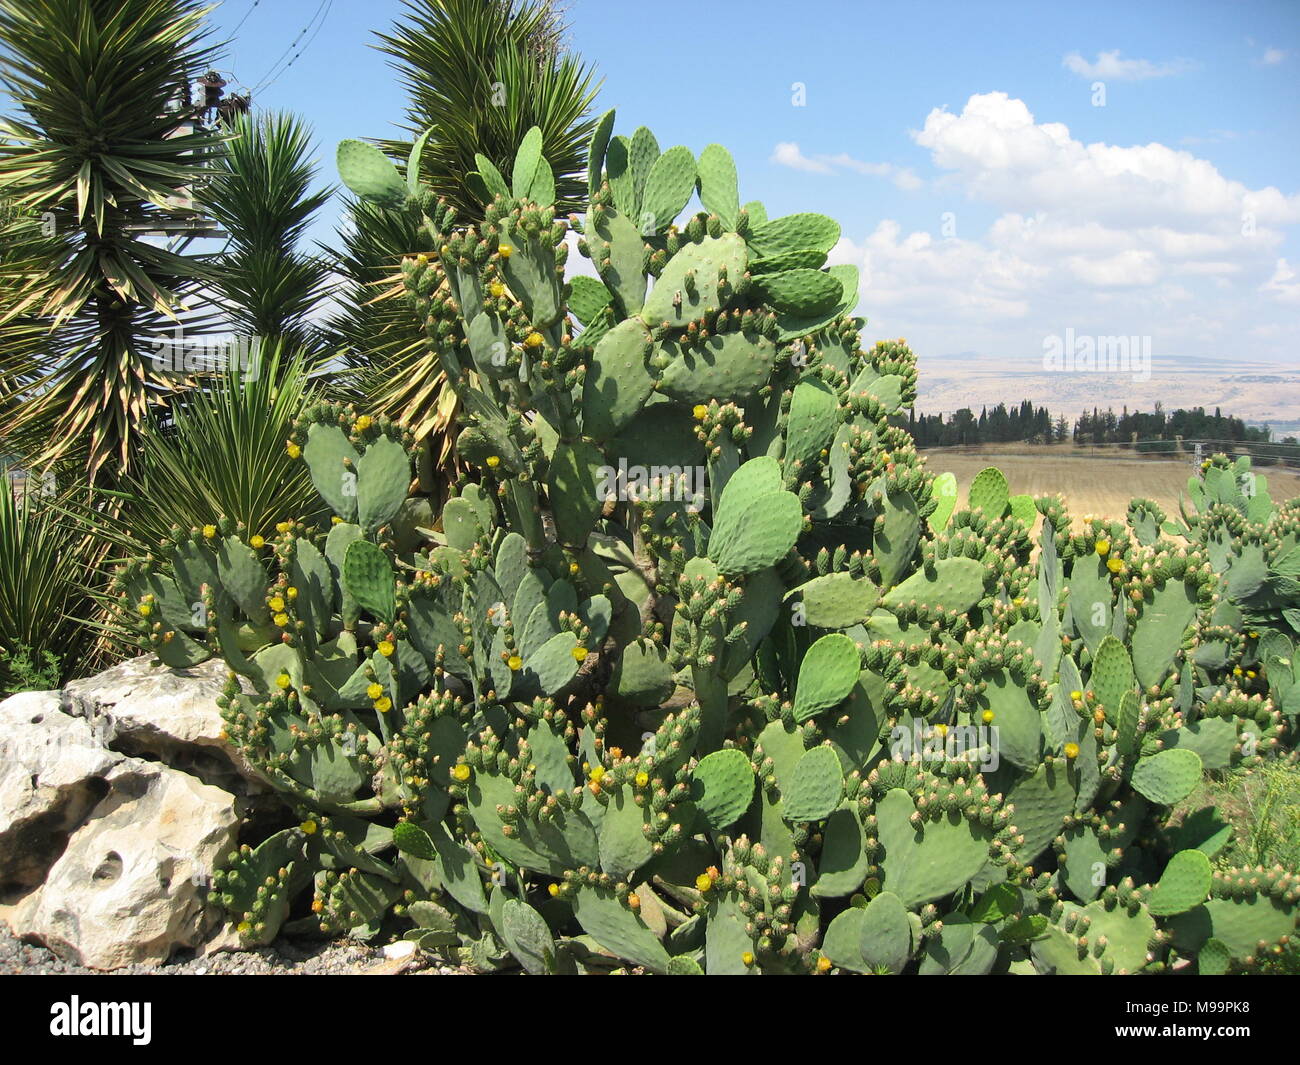 Flowering Prickly Pear Cactus in Israel Stock Photo